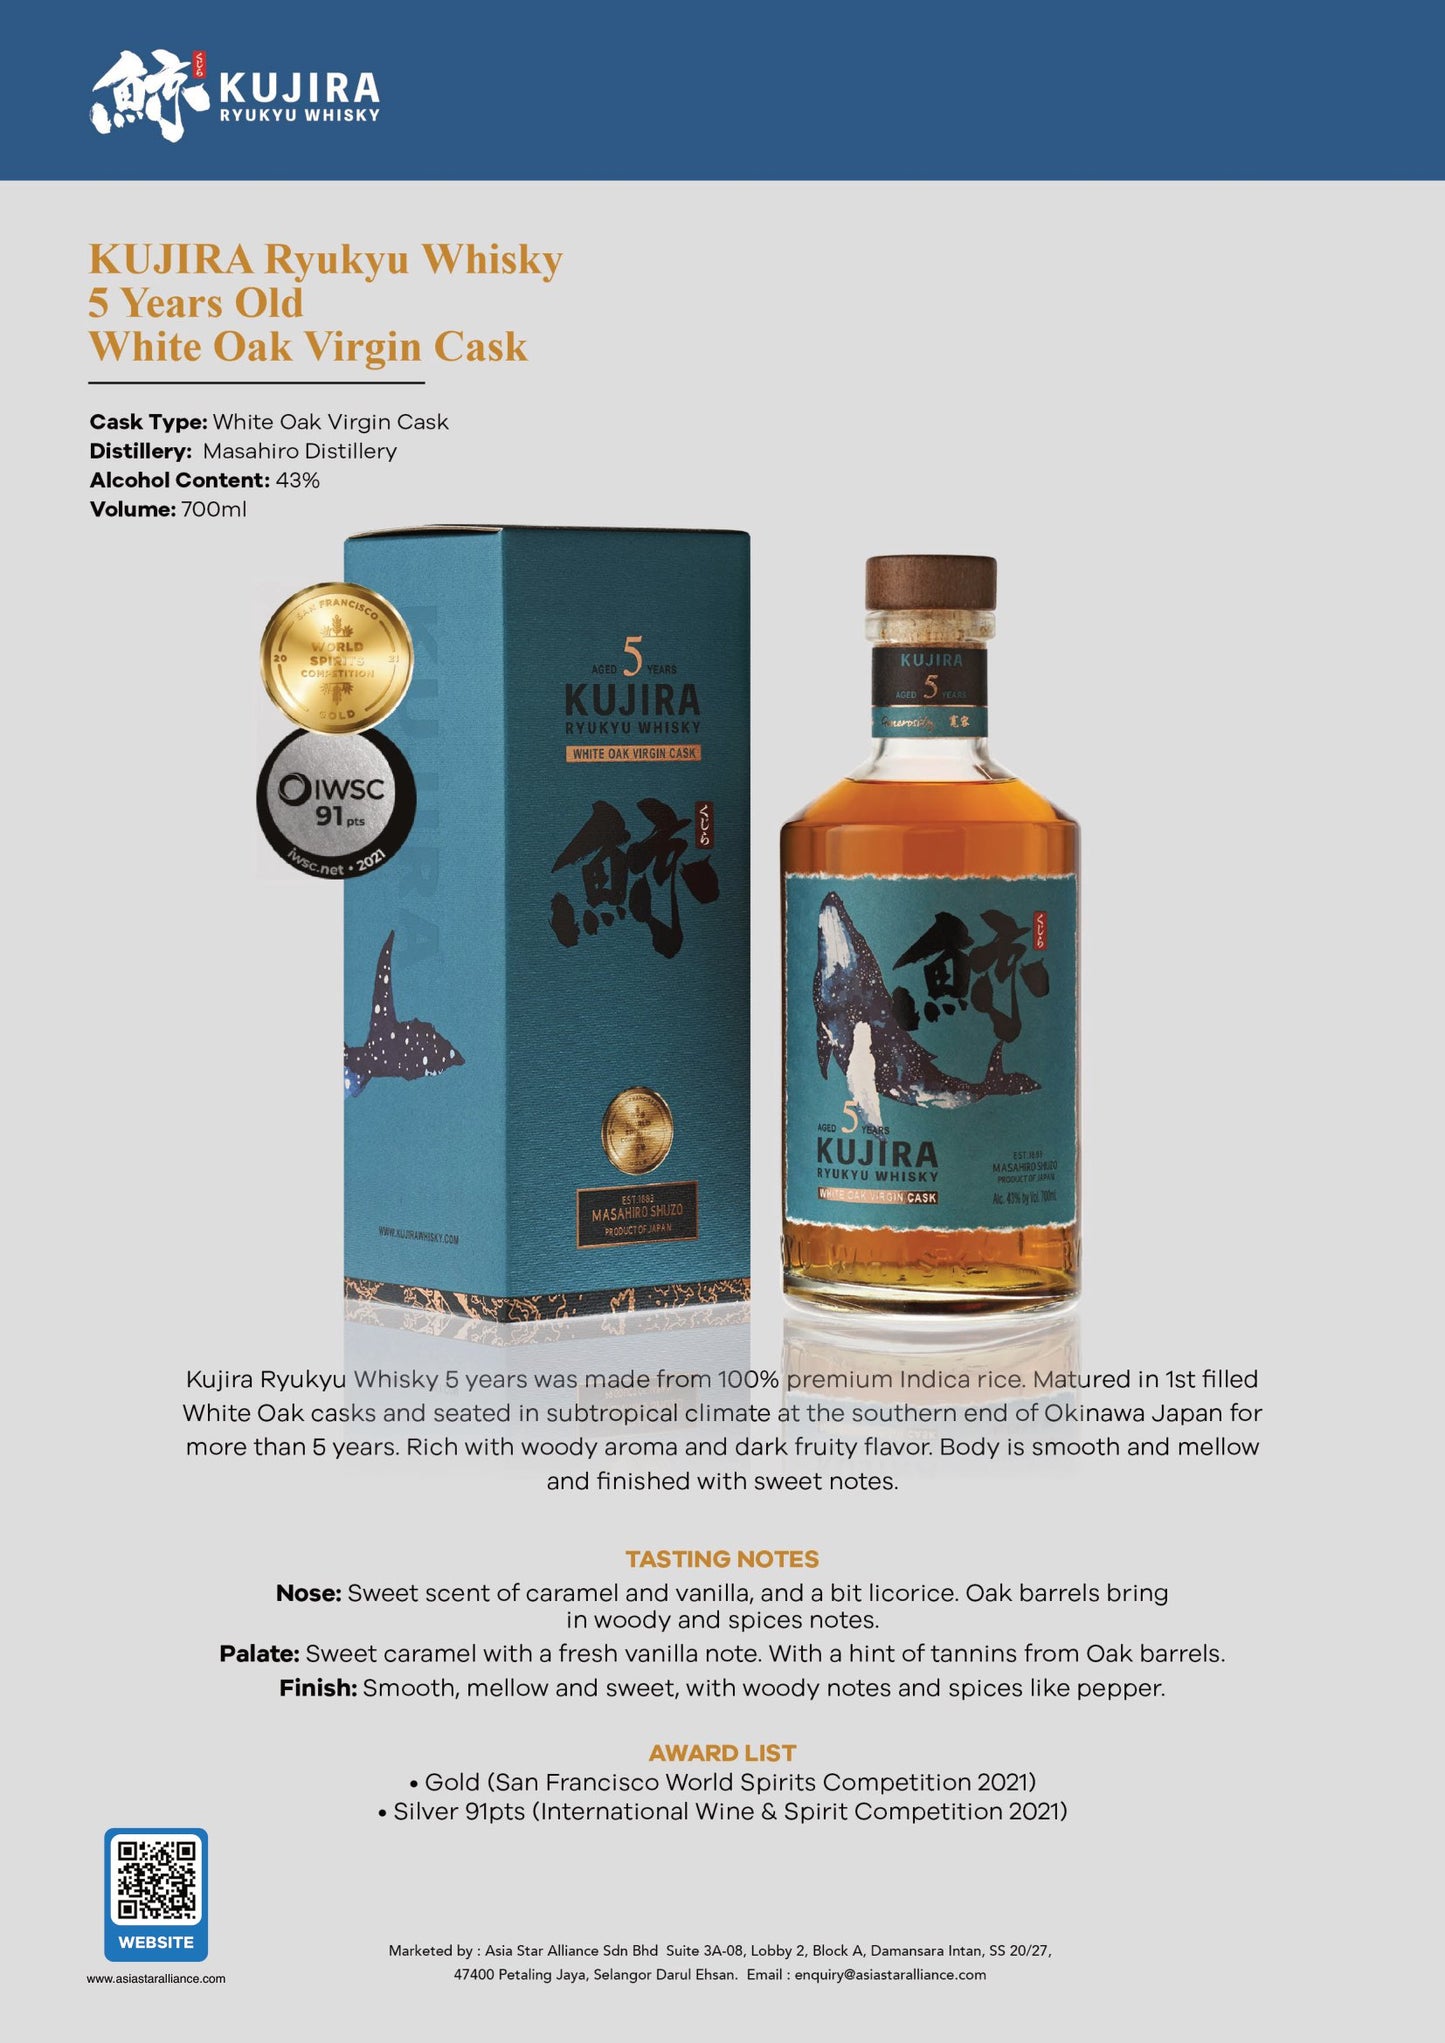 Kujira 5 Years Old Ryukyu Whisky - White Oak Virgin Cask [700ml]